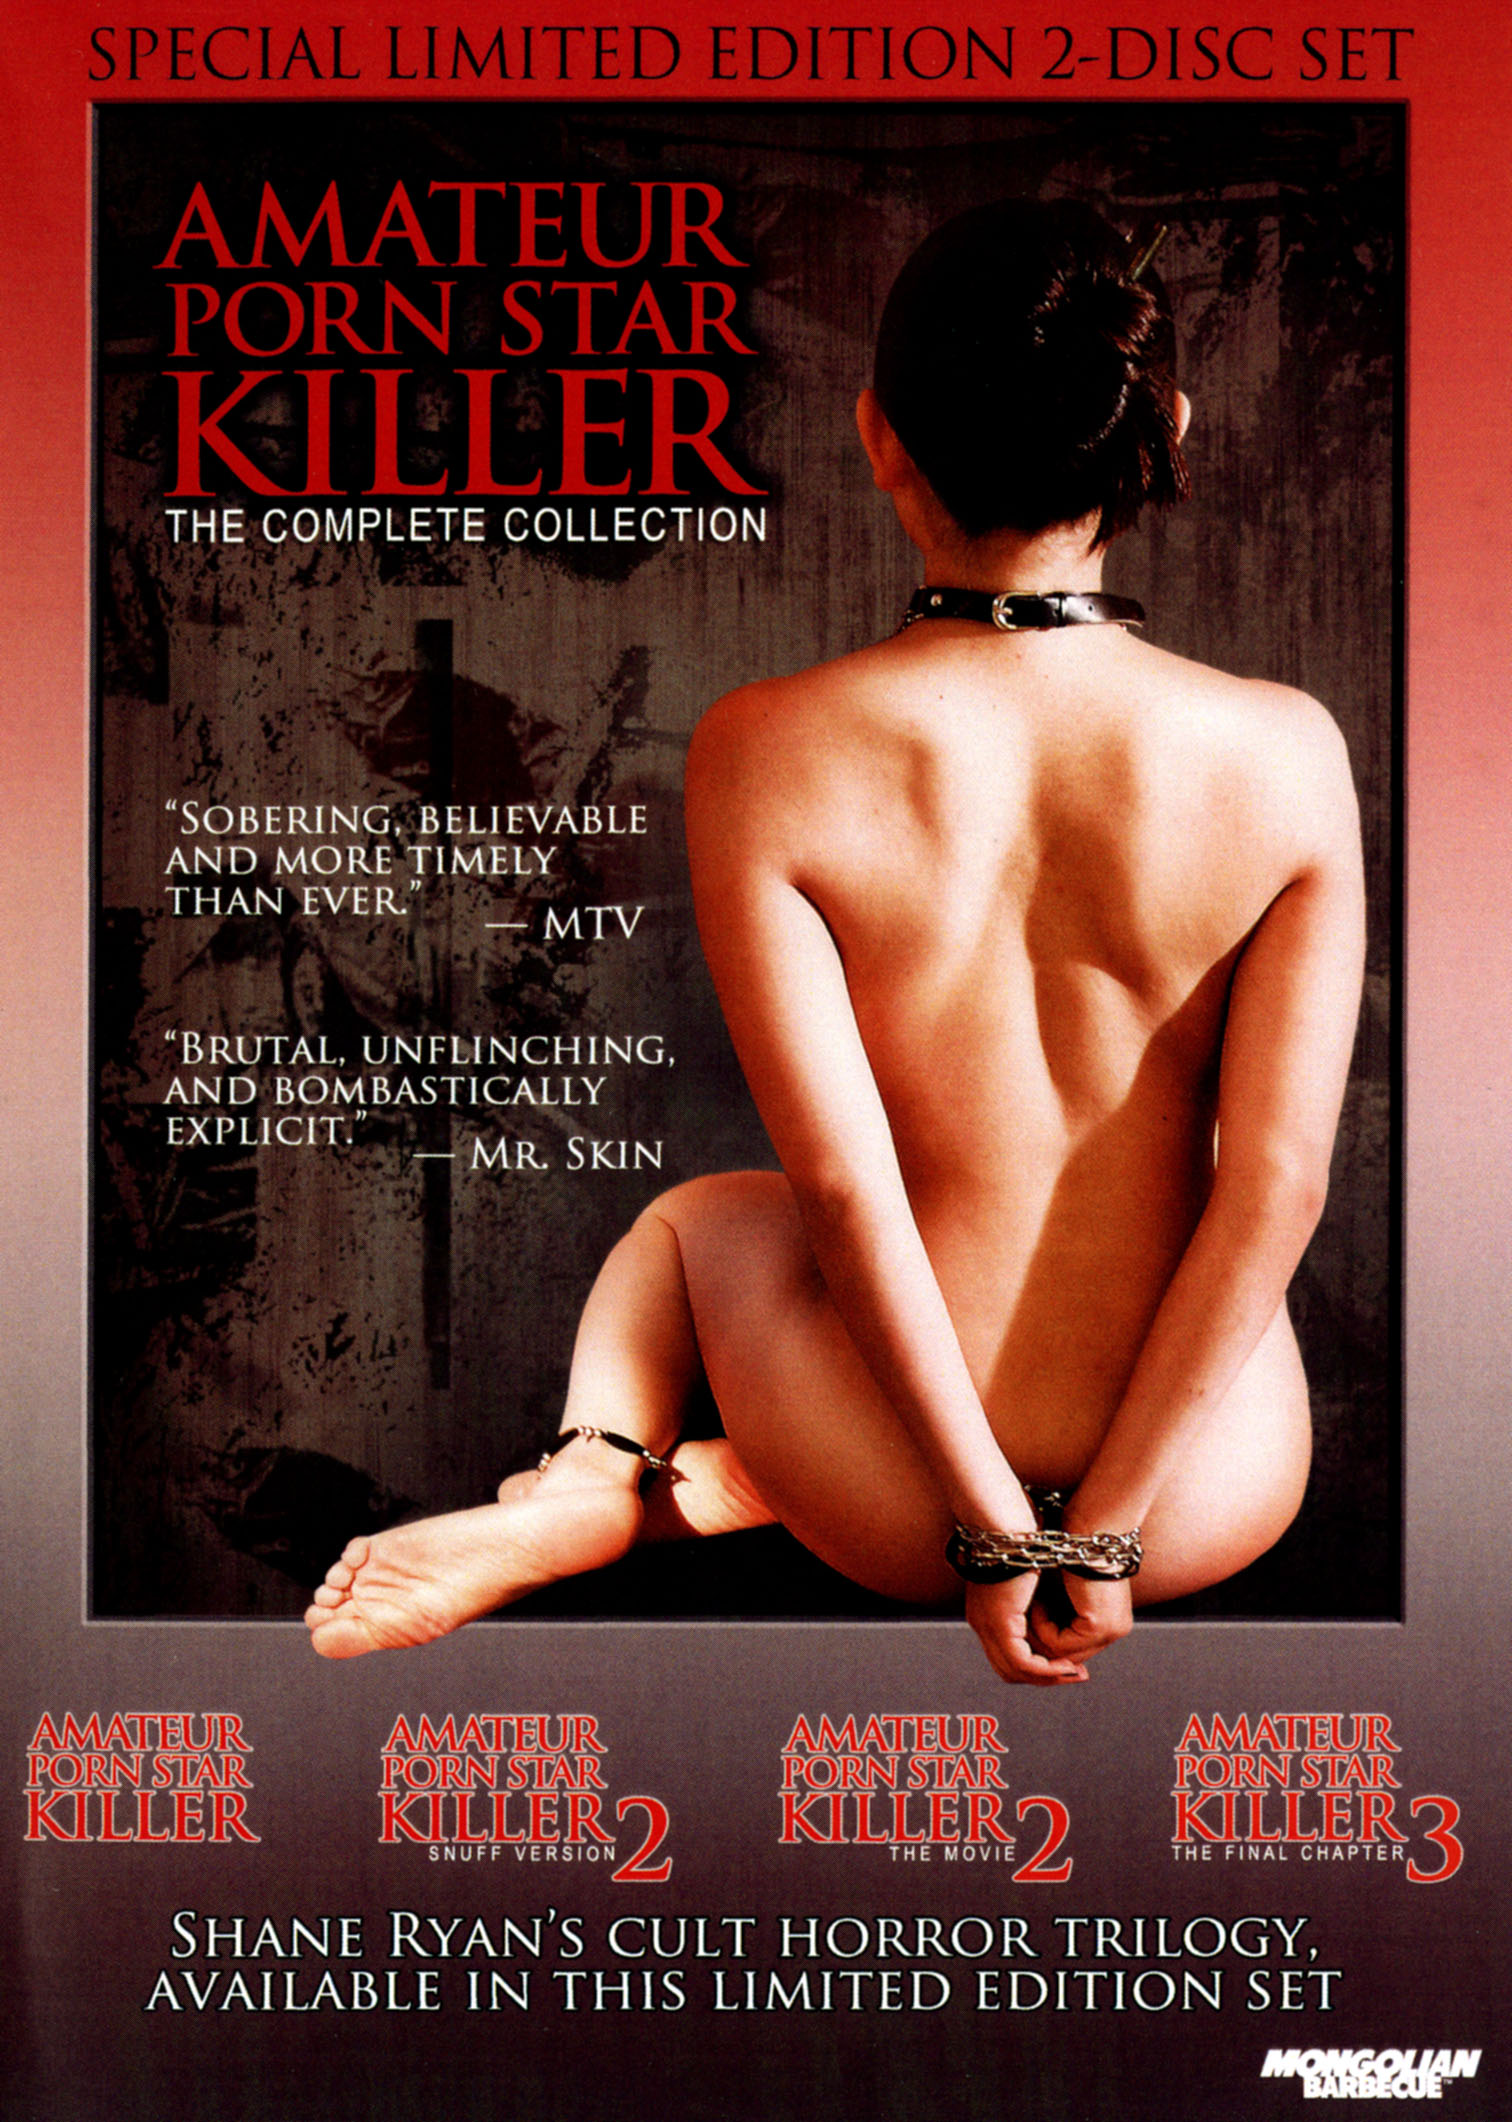 Ameture Porn Starlets - Best Buy: Amateur Porn Star Killer: The Complete Collection [2 Discs] [DVD]